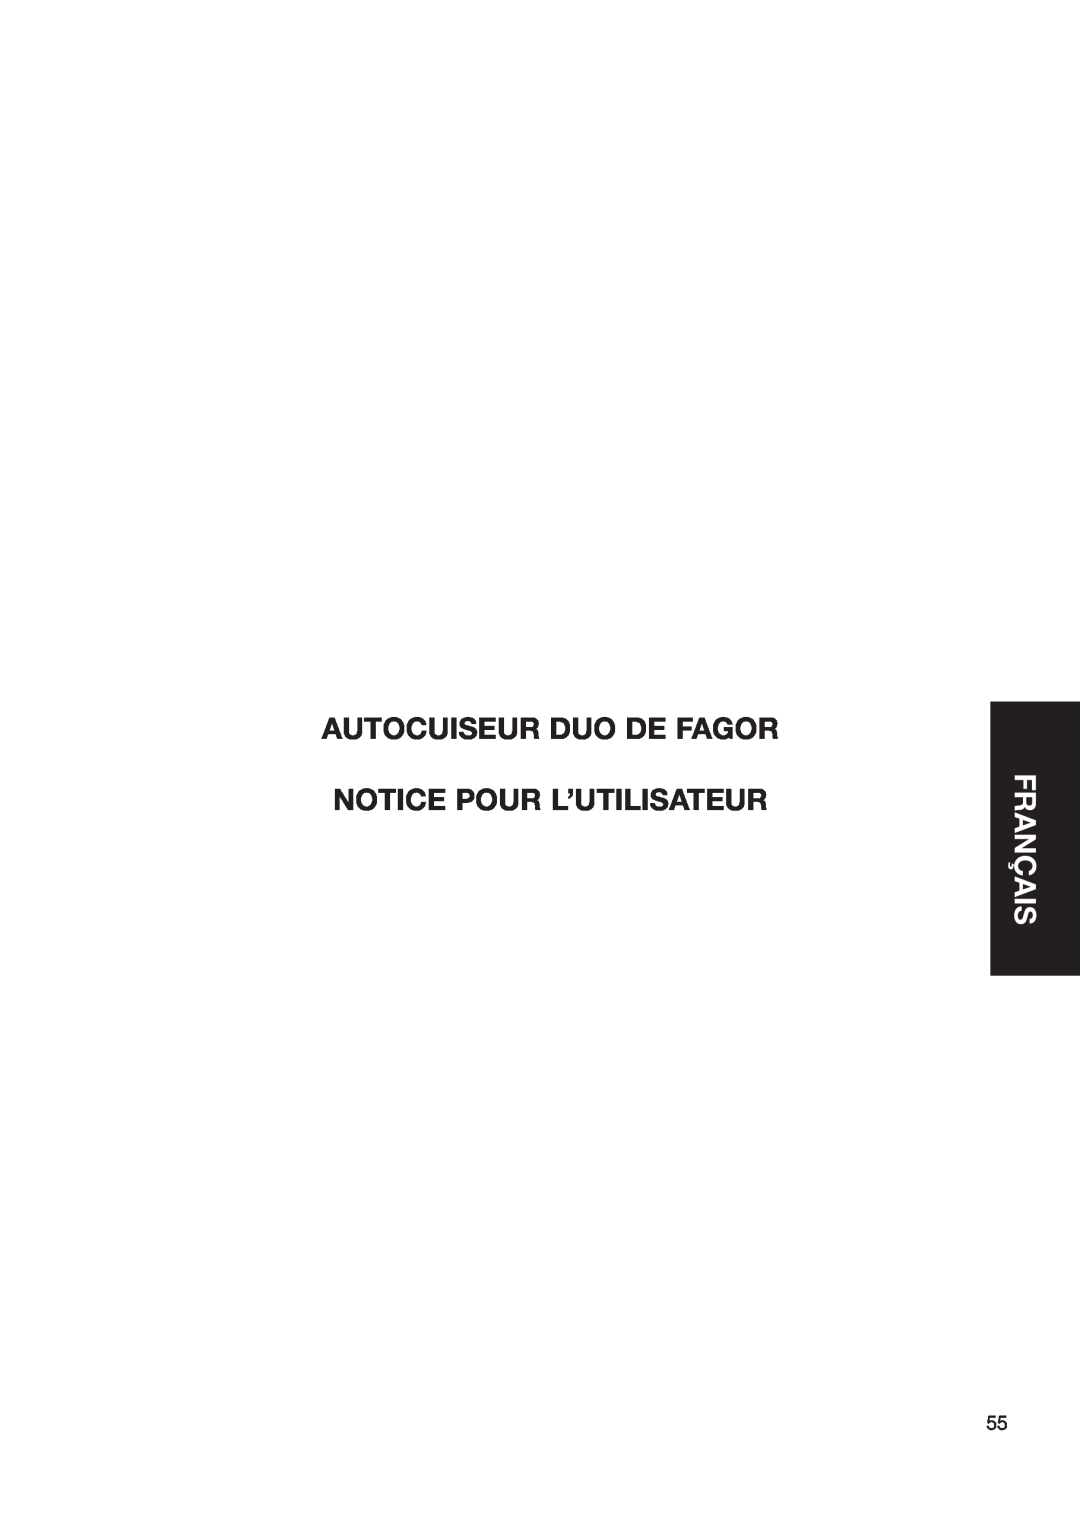 Fagor America fagor duo pressure cooker user manual Autocuiseur Duo De Fagor, Notice Pour L’Utilisateur, Français 